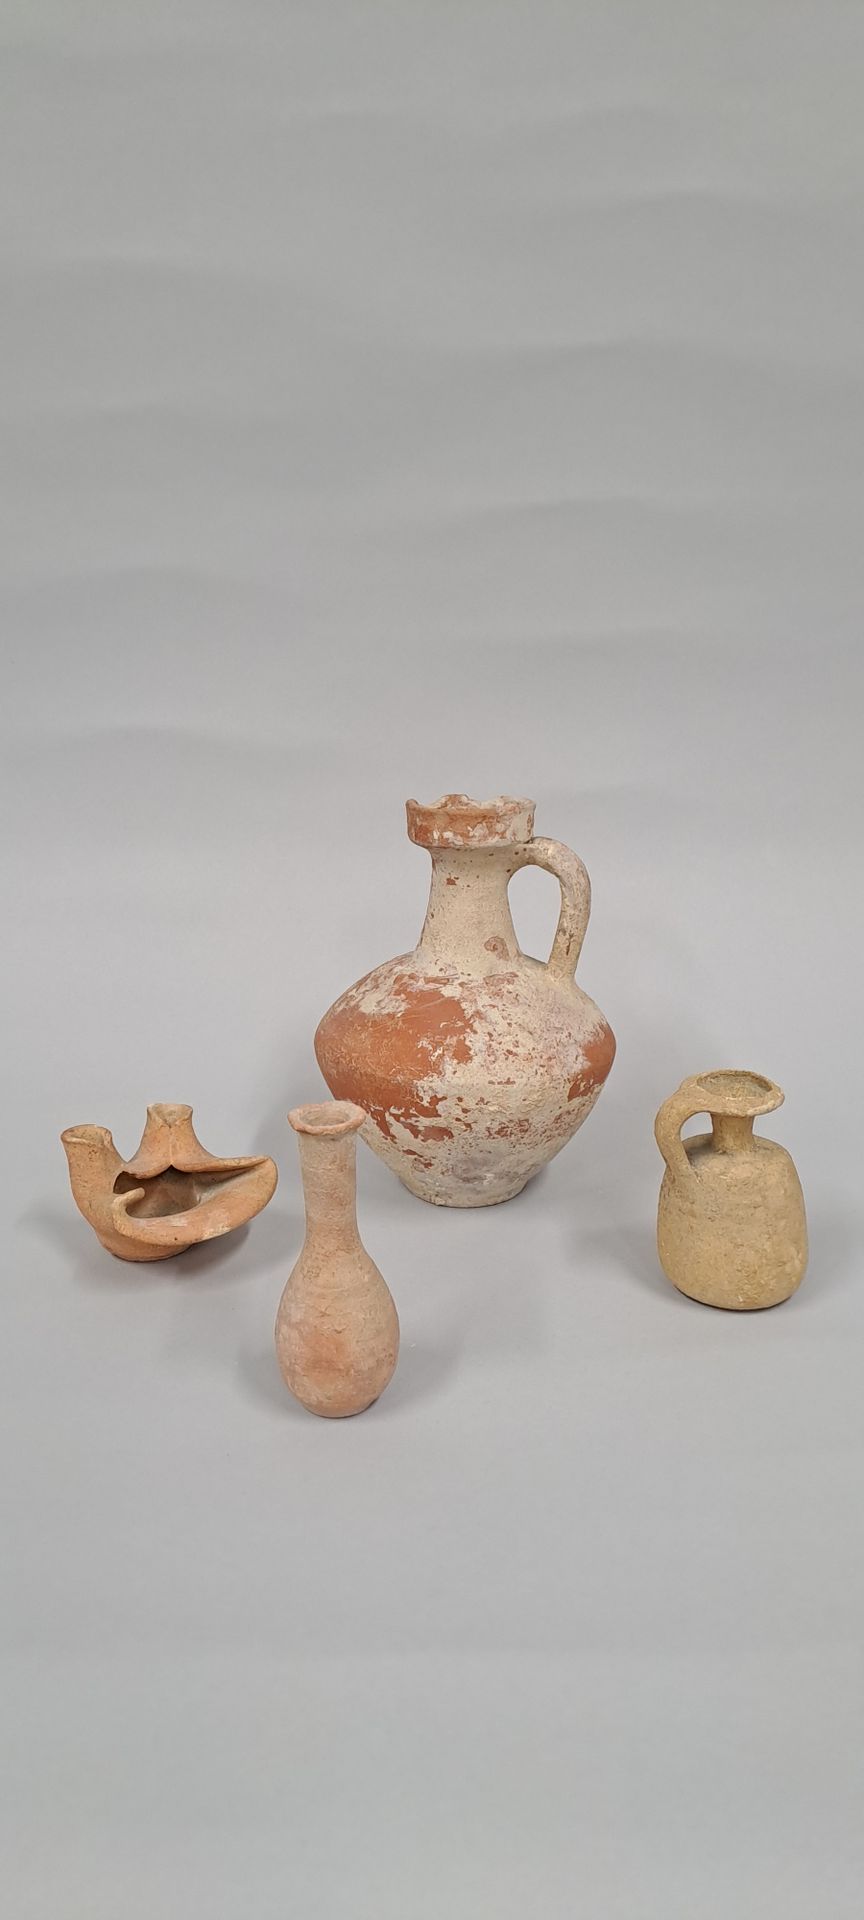 Null 拍品包括一个高颈香肠，两个水壶和一个双夹子灯。
粉红色和橙色的陶器。
北非，公元前2世纪至4世纪
H.9厘米至18厘米